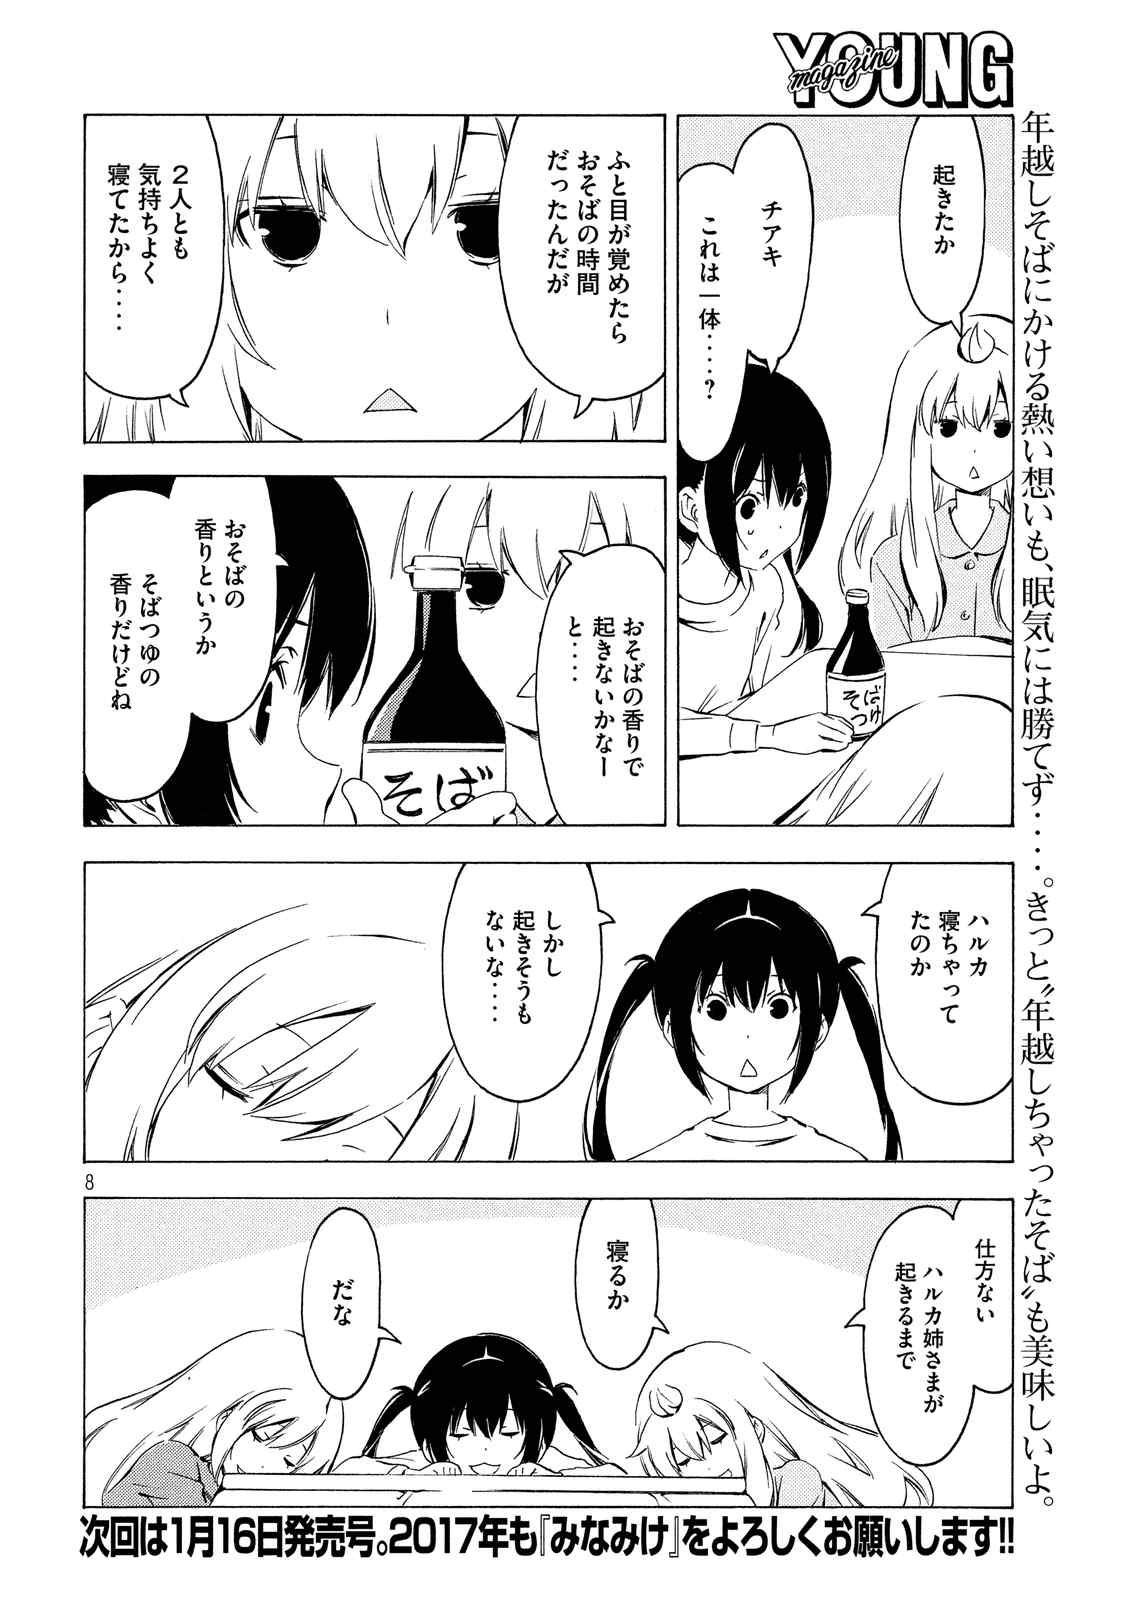 Minami-ke - Chapter 307 - Page 8